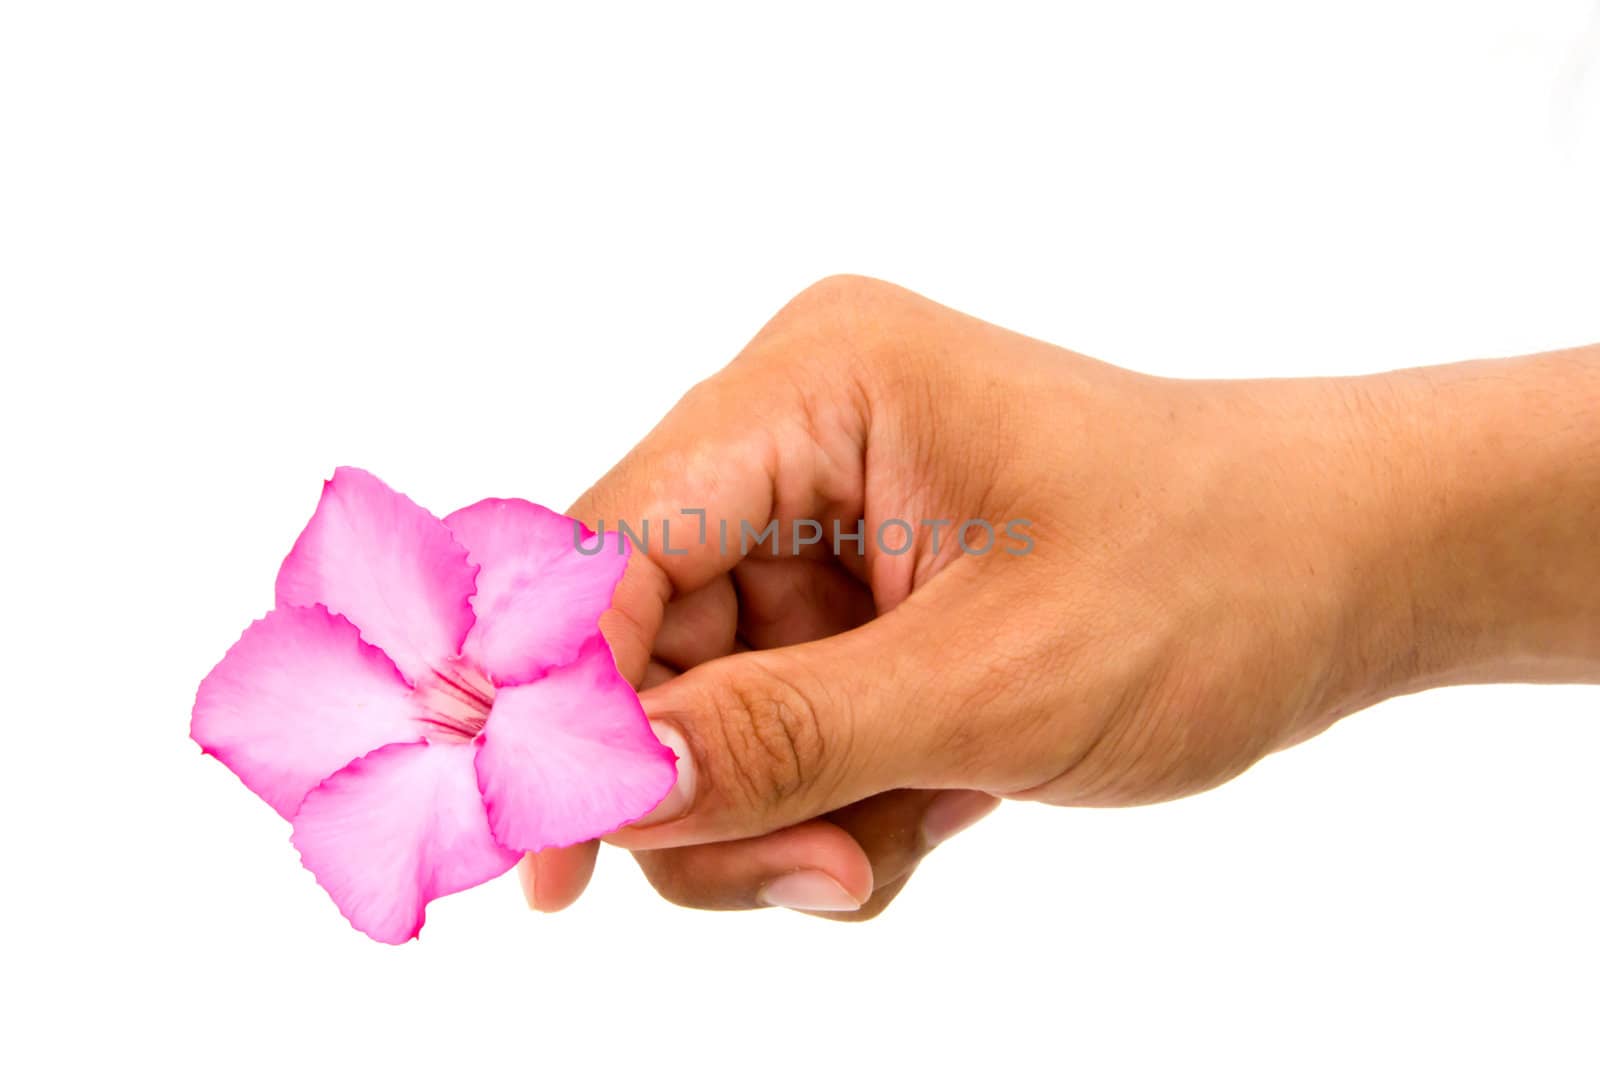 Pink flower in hand by Noppharat_th